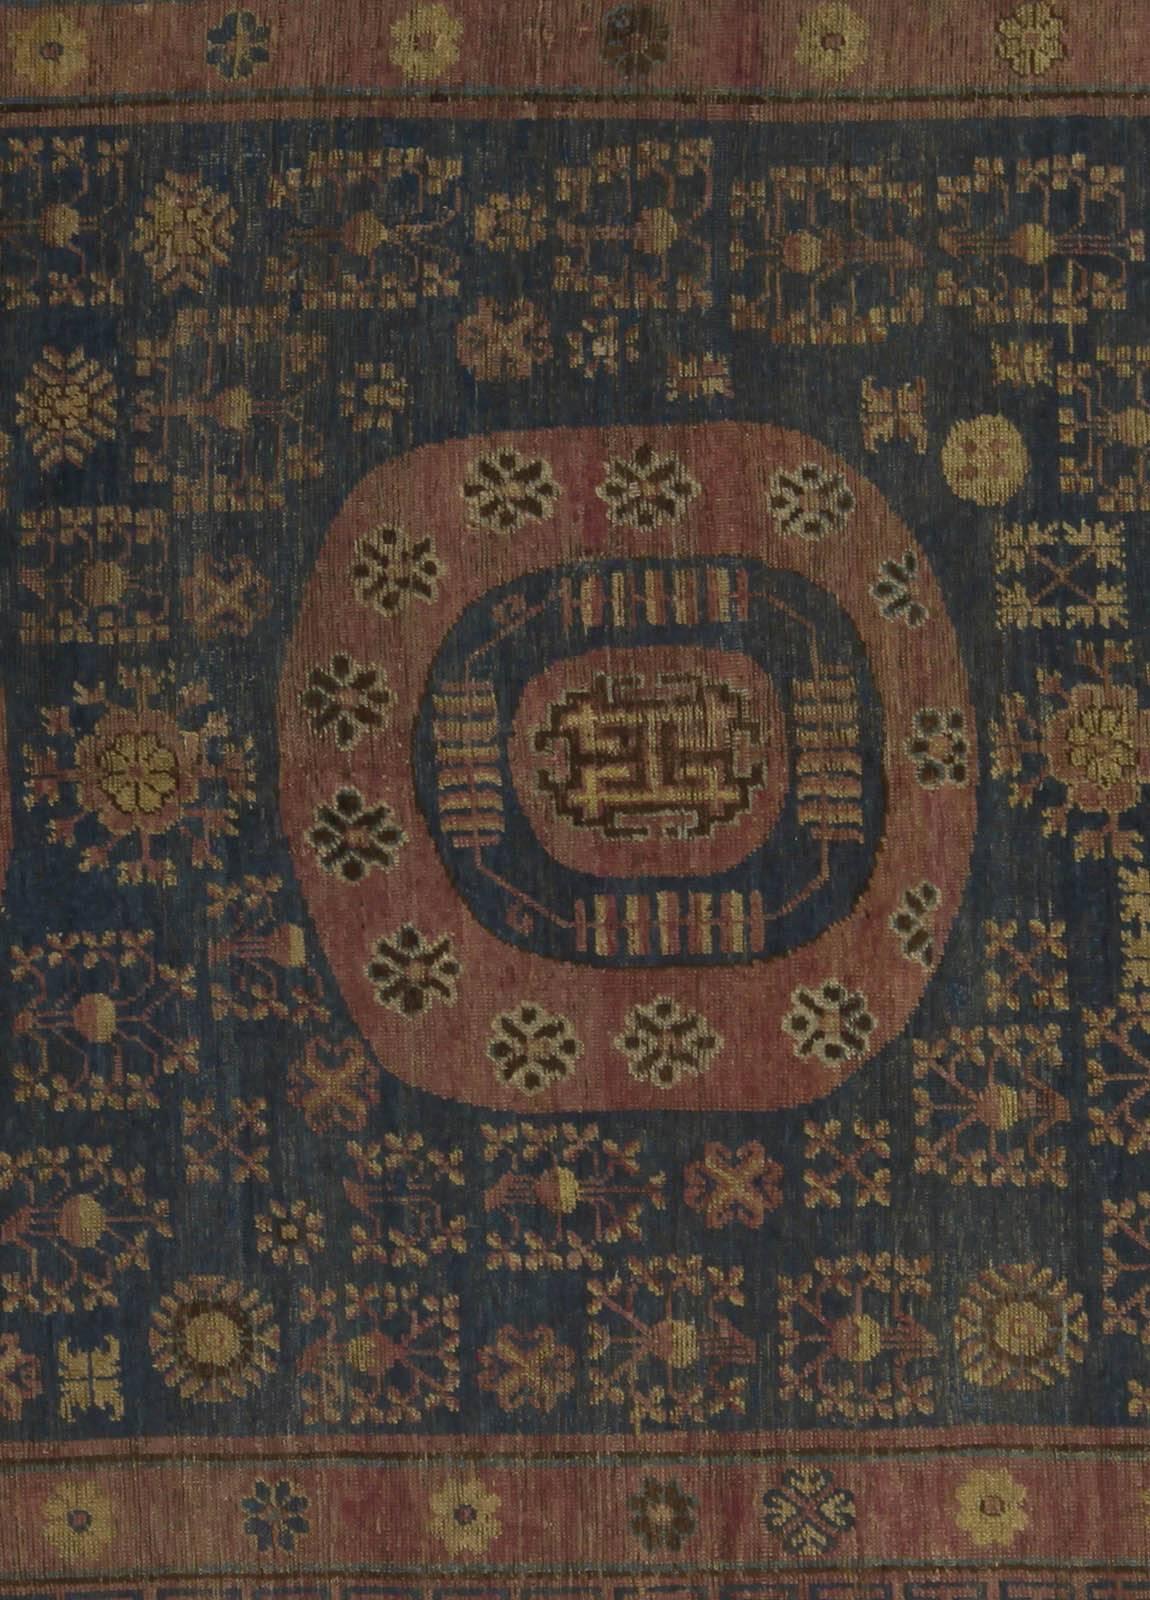 Vintage Samarkand ‘Khotan’ Rug
Size: 7'0